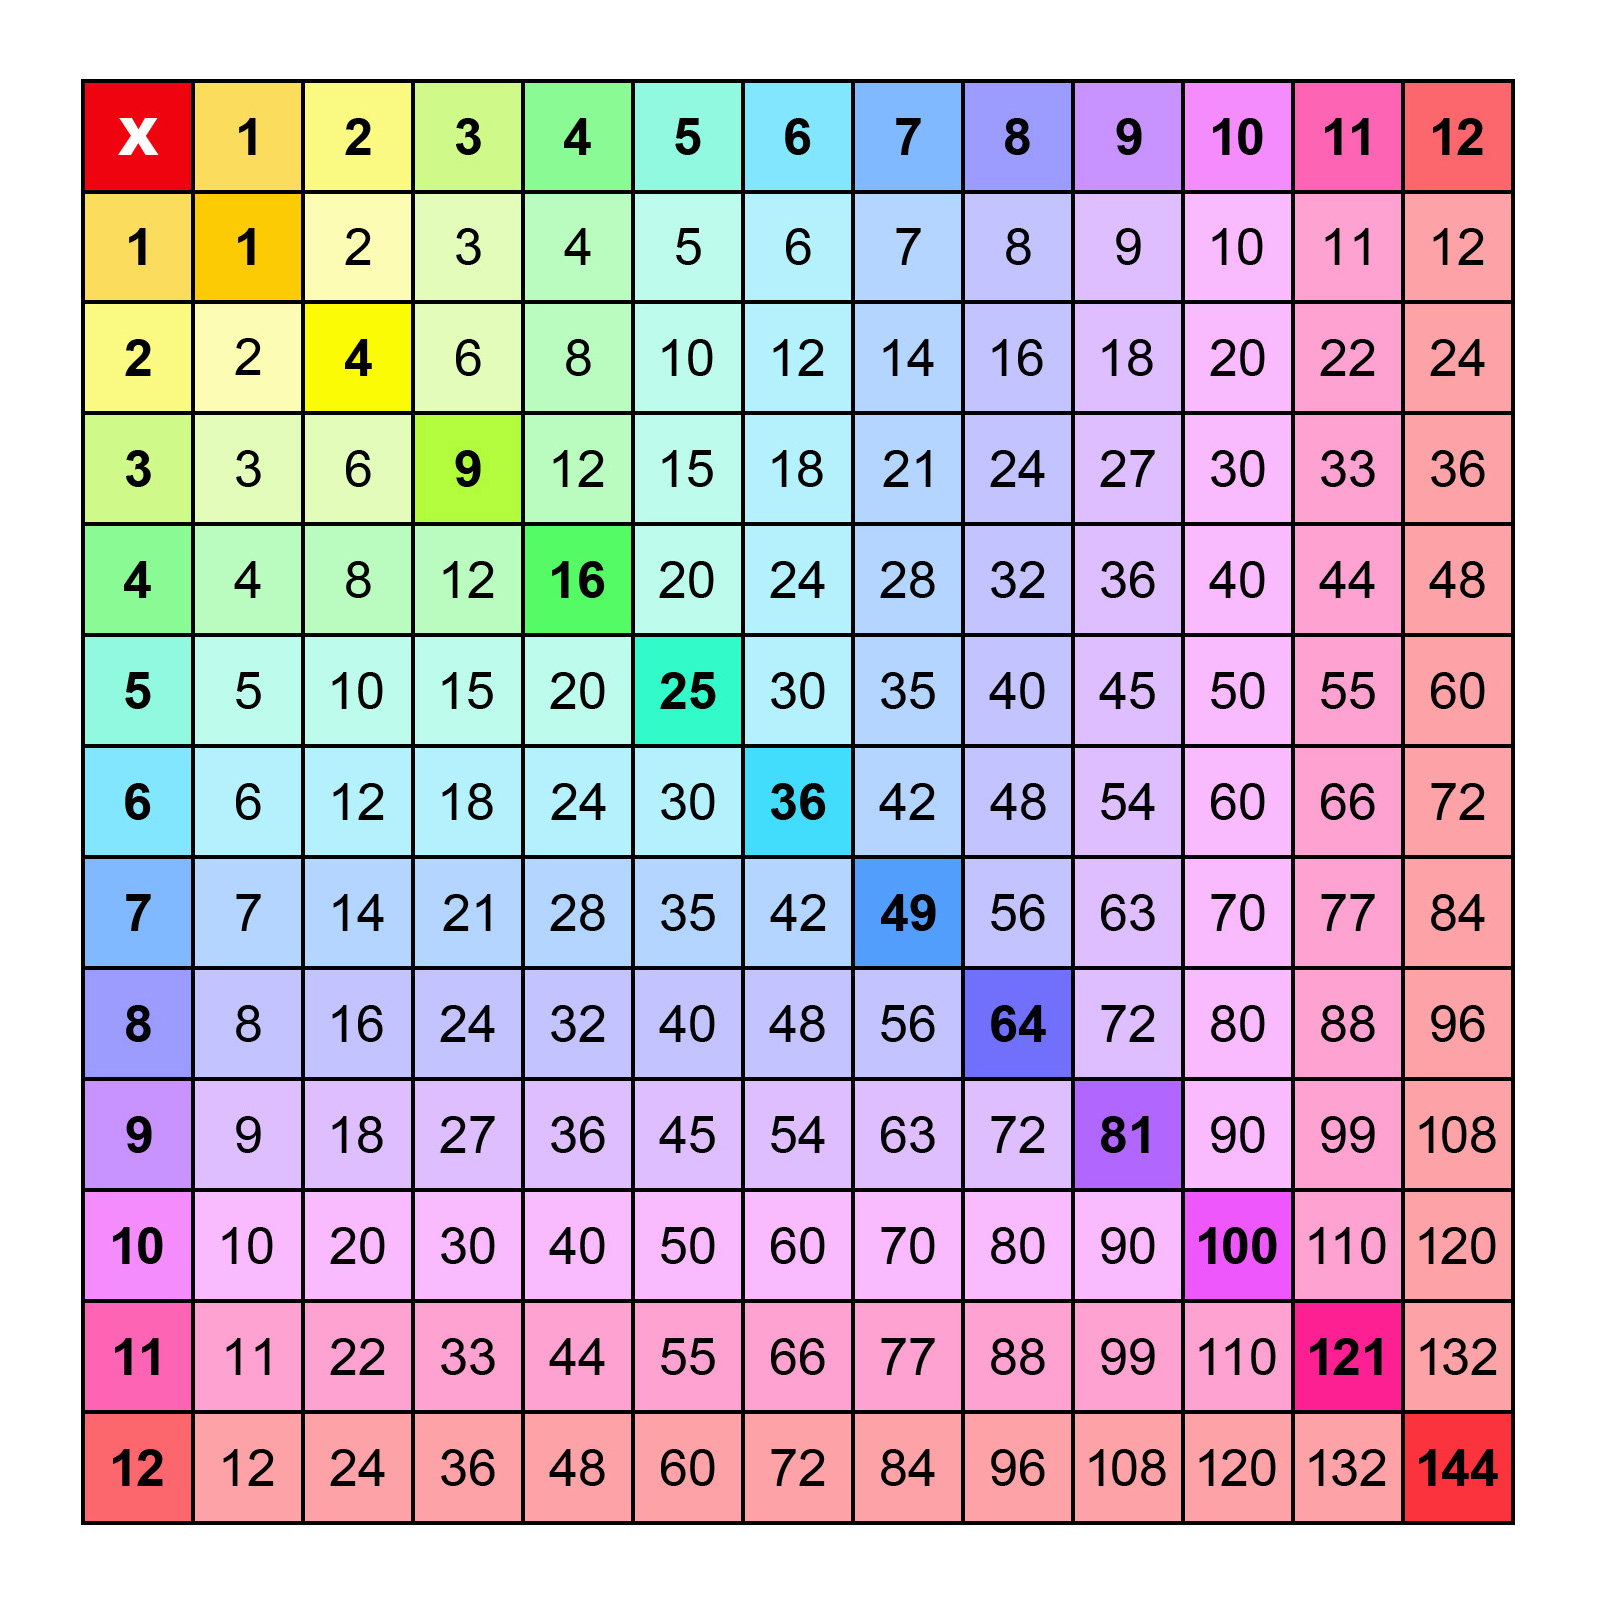 Printable Multiplication Charts 1 12